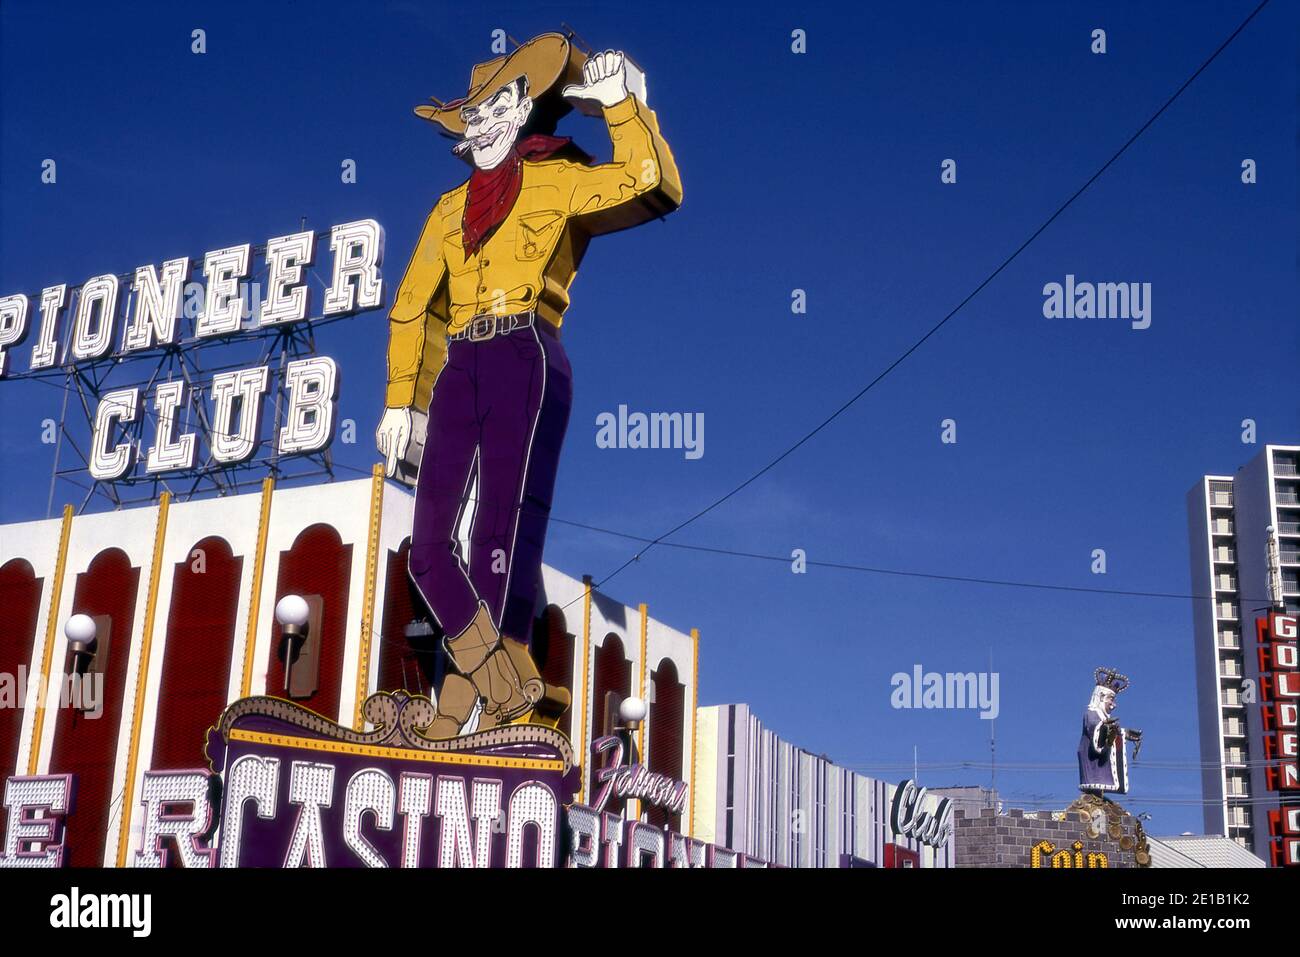  Las Vegas Skyline Wall Art - Famous Iconic Vintage Retro  Welcome Sign Photo - Unique Gift for Poker, Blackjack, Slot Machine,  Roulette Wheel, Craps Table, Gambling Fan, Gambler - UNFRAMED Poster 